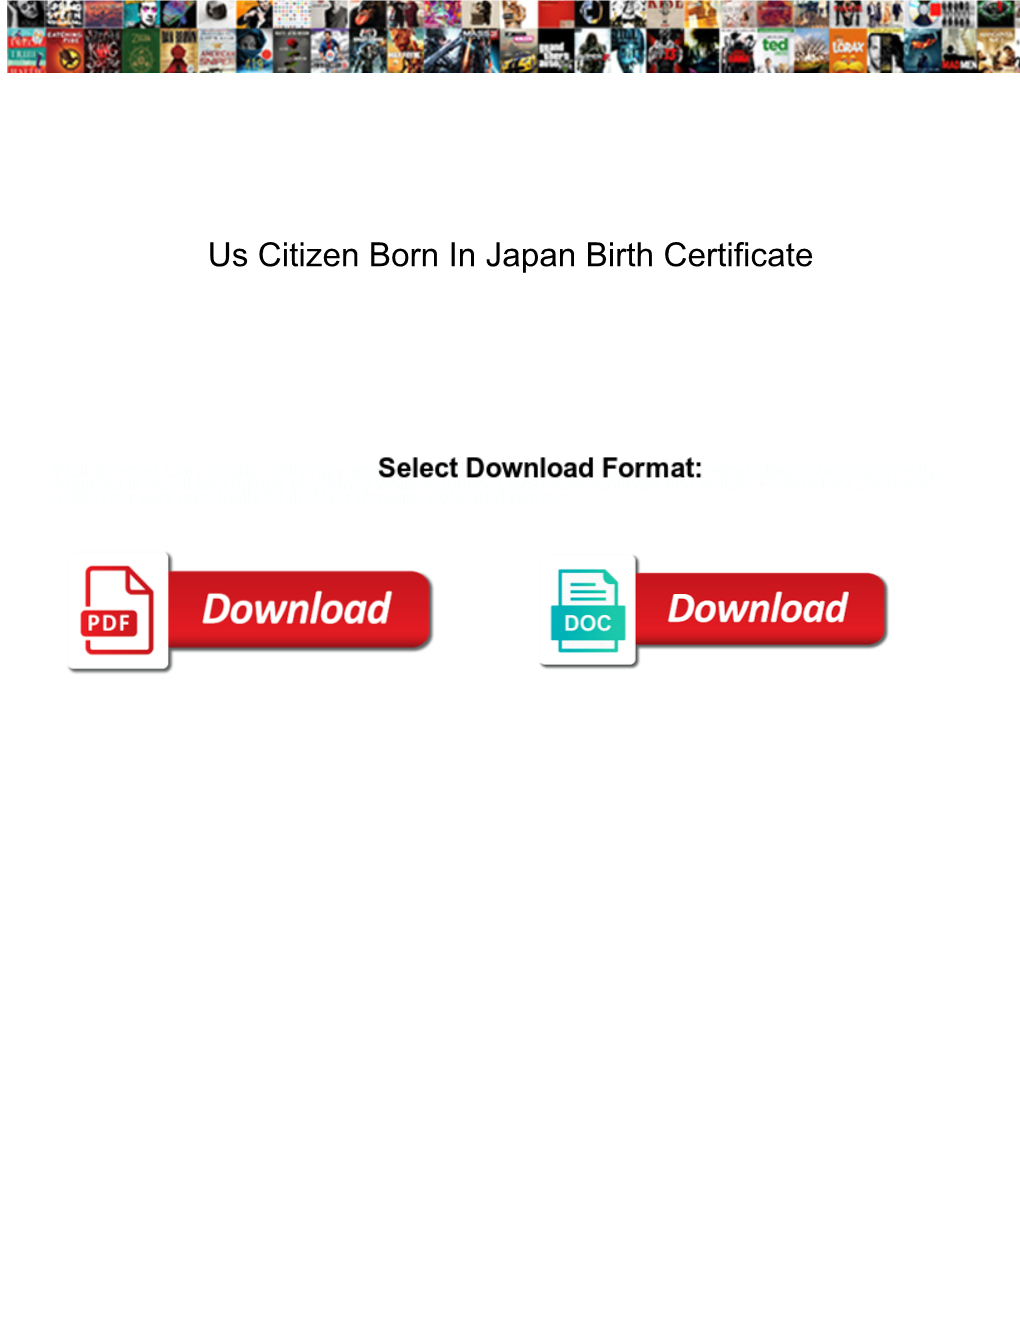 Us Citizen Born in Japan Birth Certificate